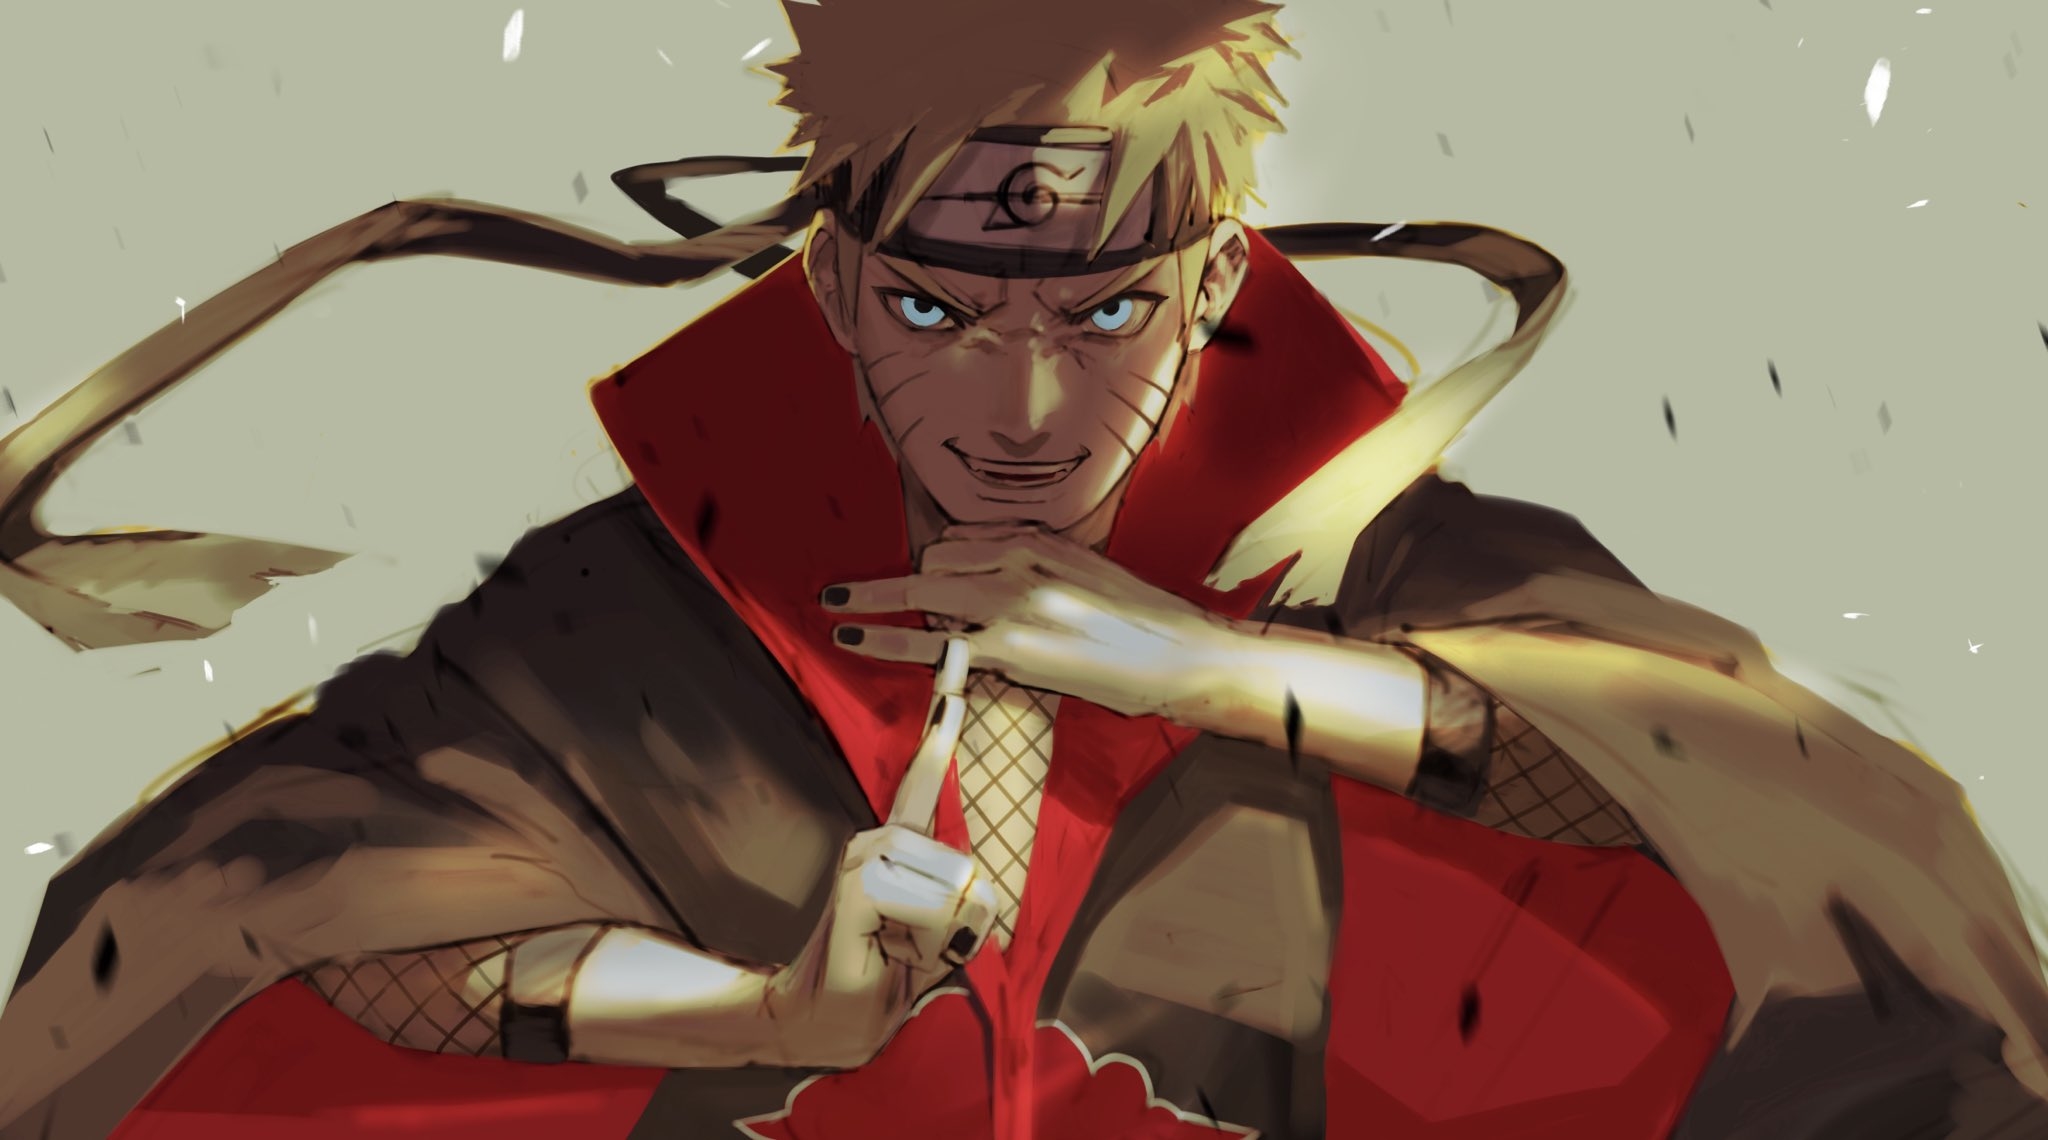 Naruto Uzumaki Digital Art 2020 Wallpaper, HD Anime 4K Wallpapers, Images,  Photos and Background - Wallpapers Den